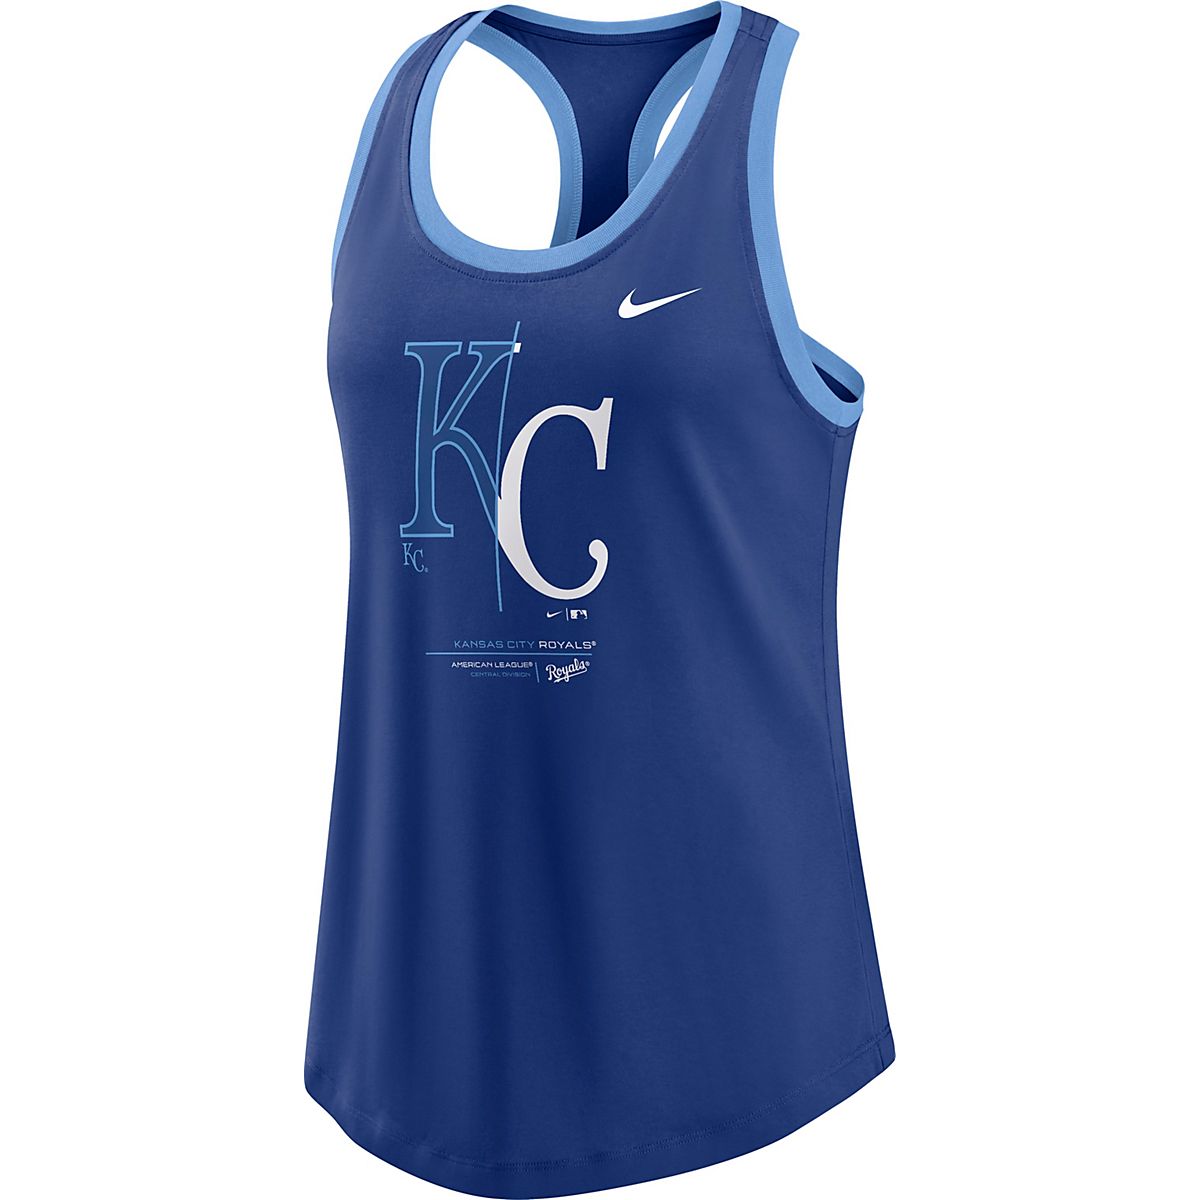  Nike Women's Kansas City Royals Light Blue Tri-Blend 3